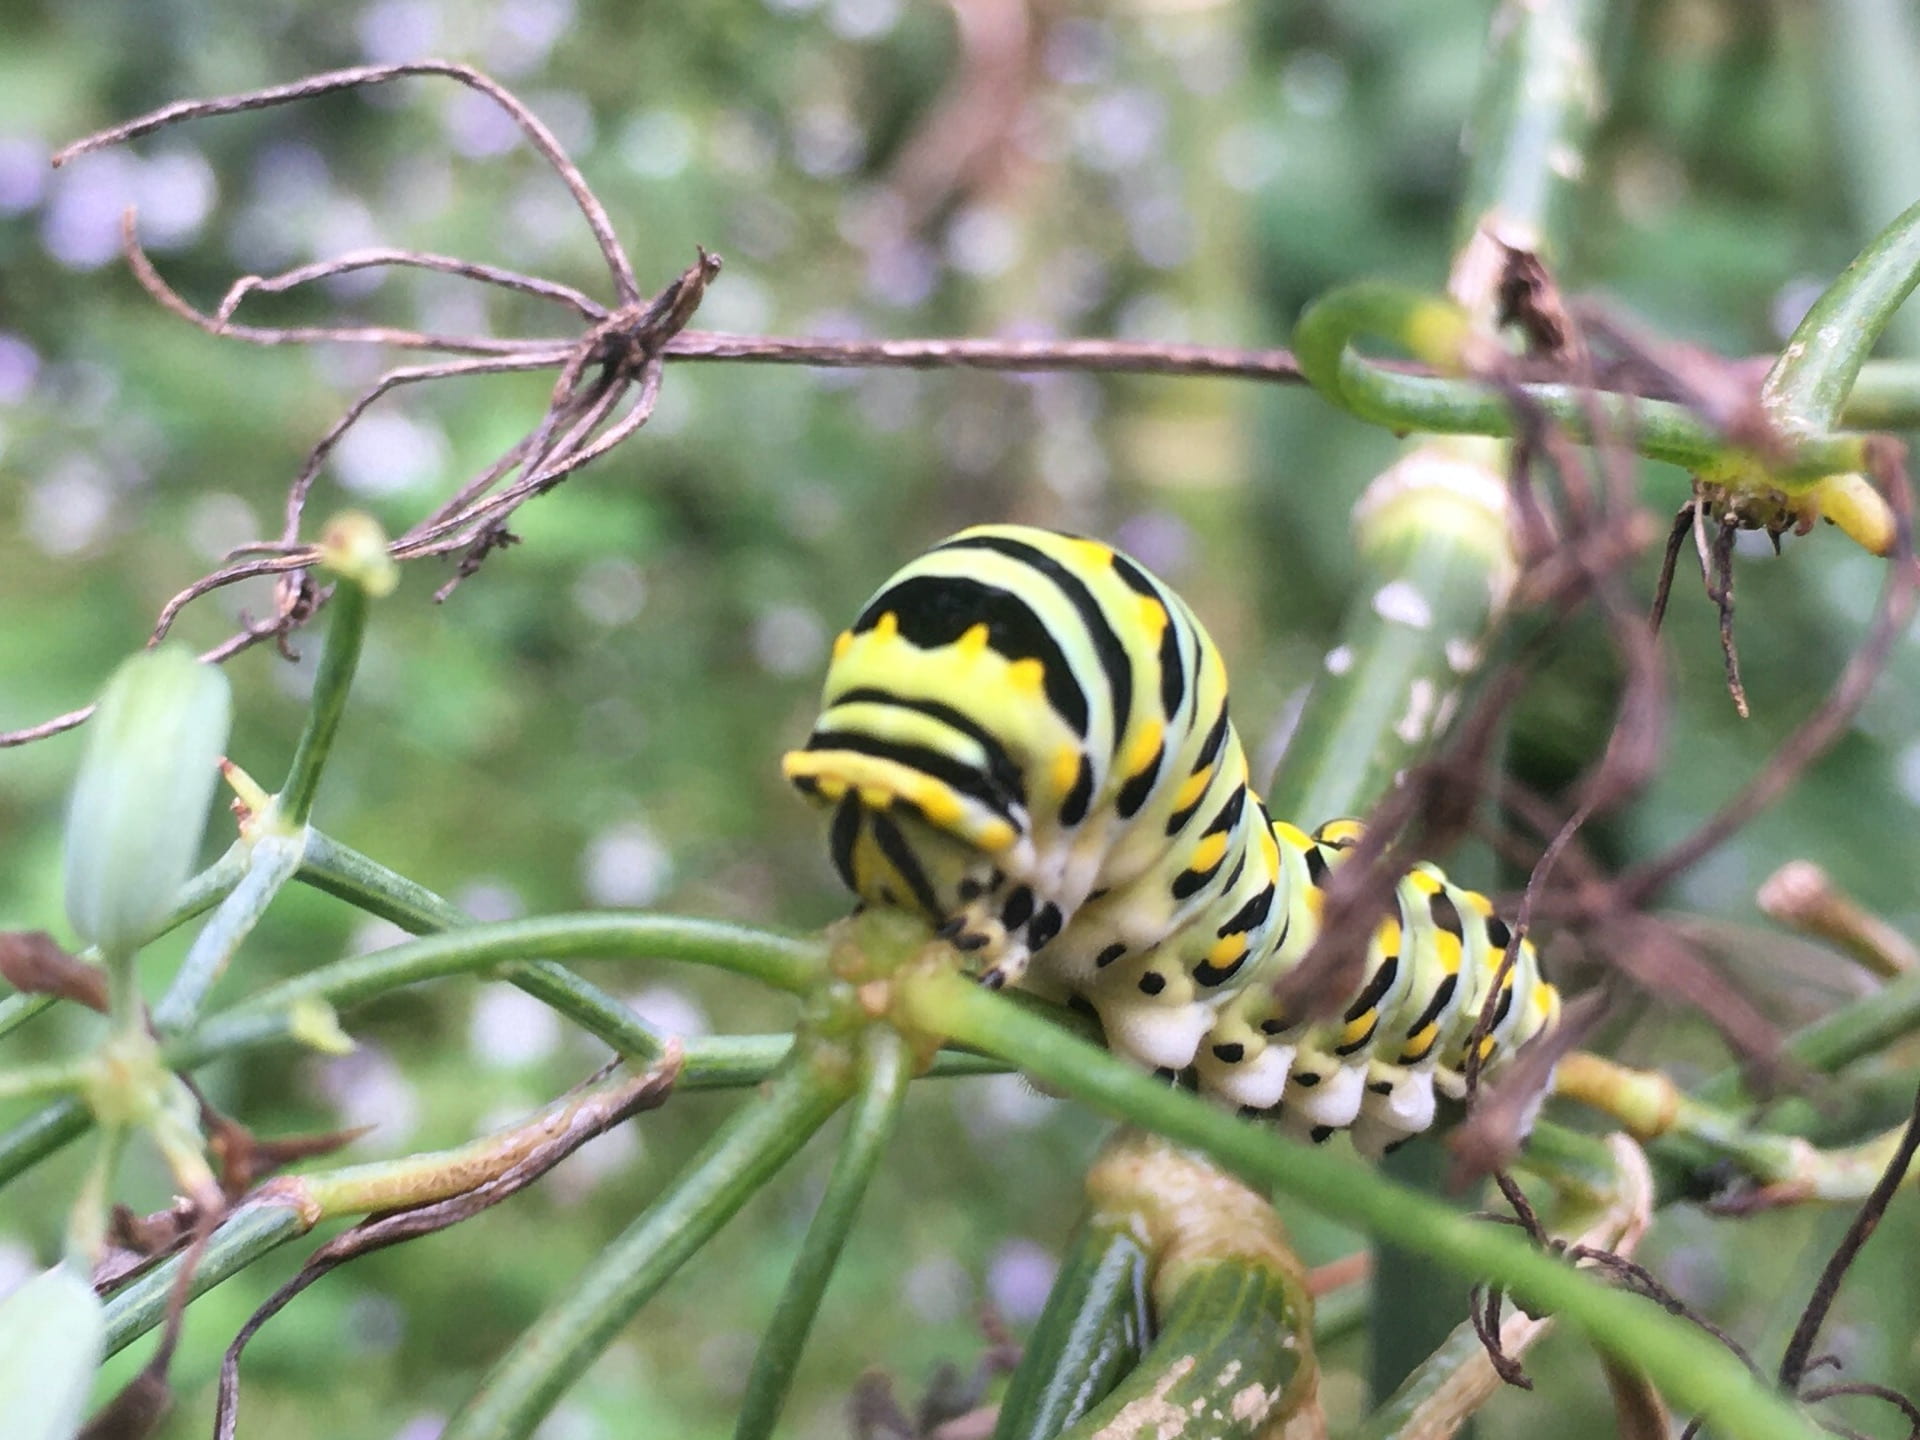 An eastern black swallowtail caterpillar munches on fennel stems.